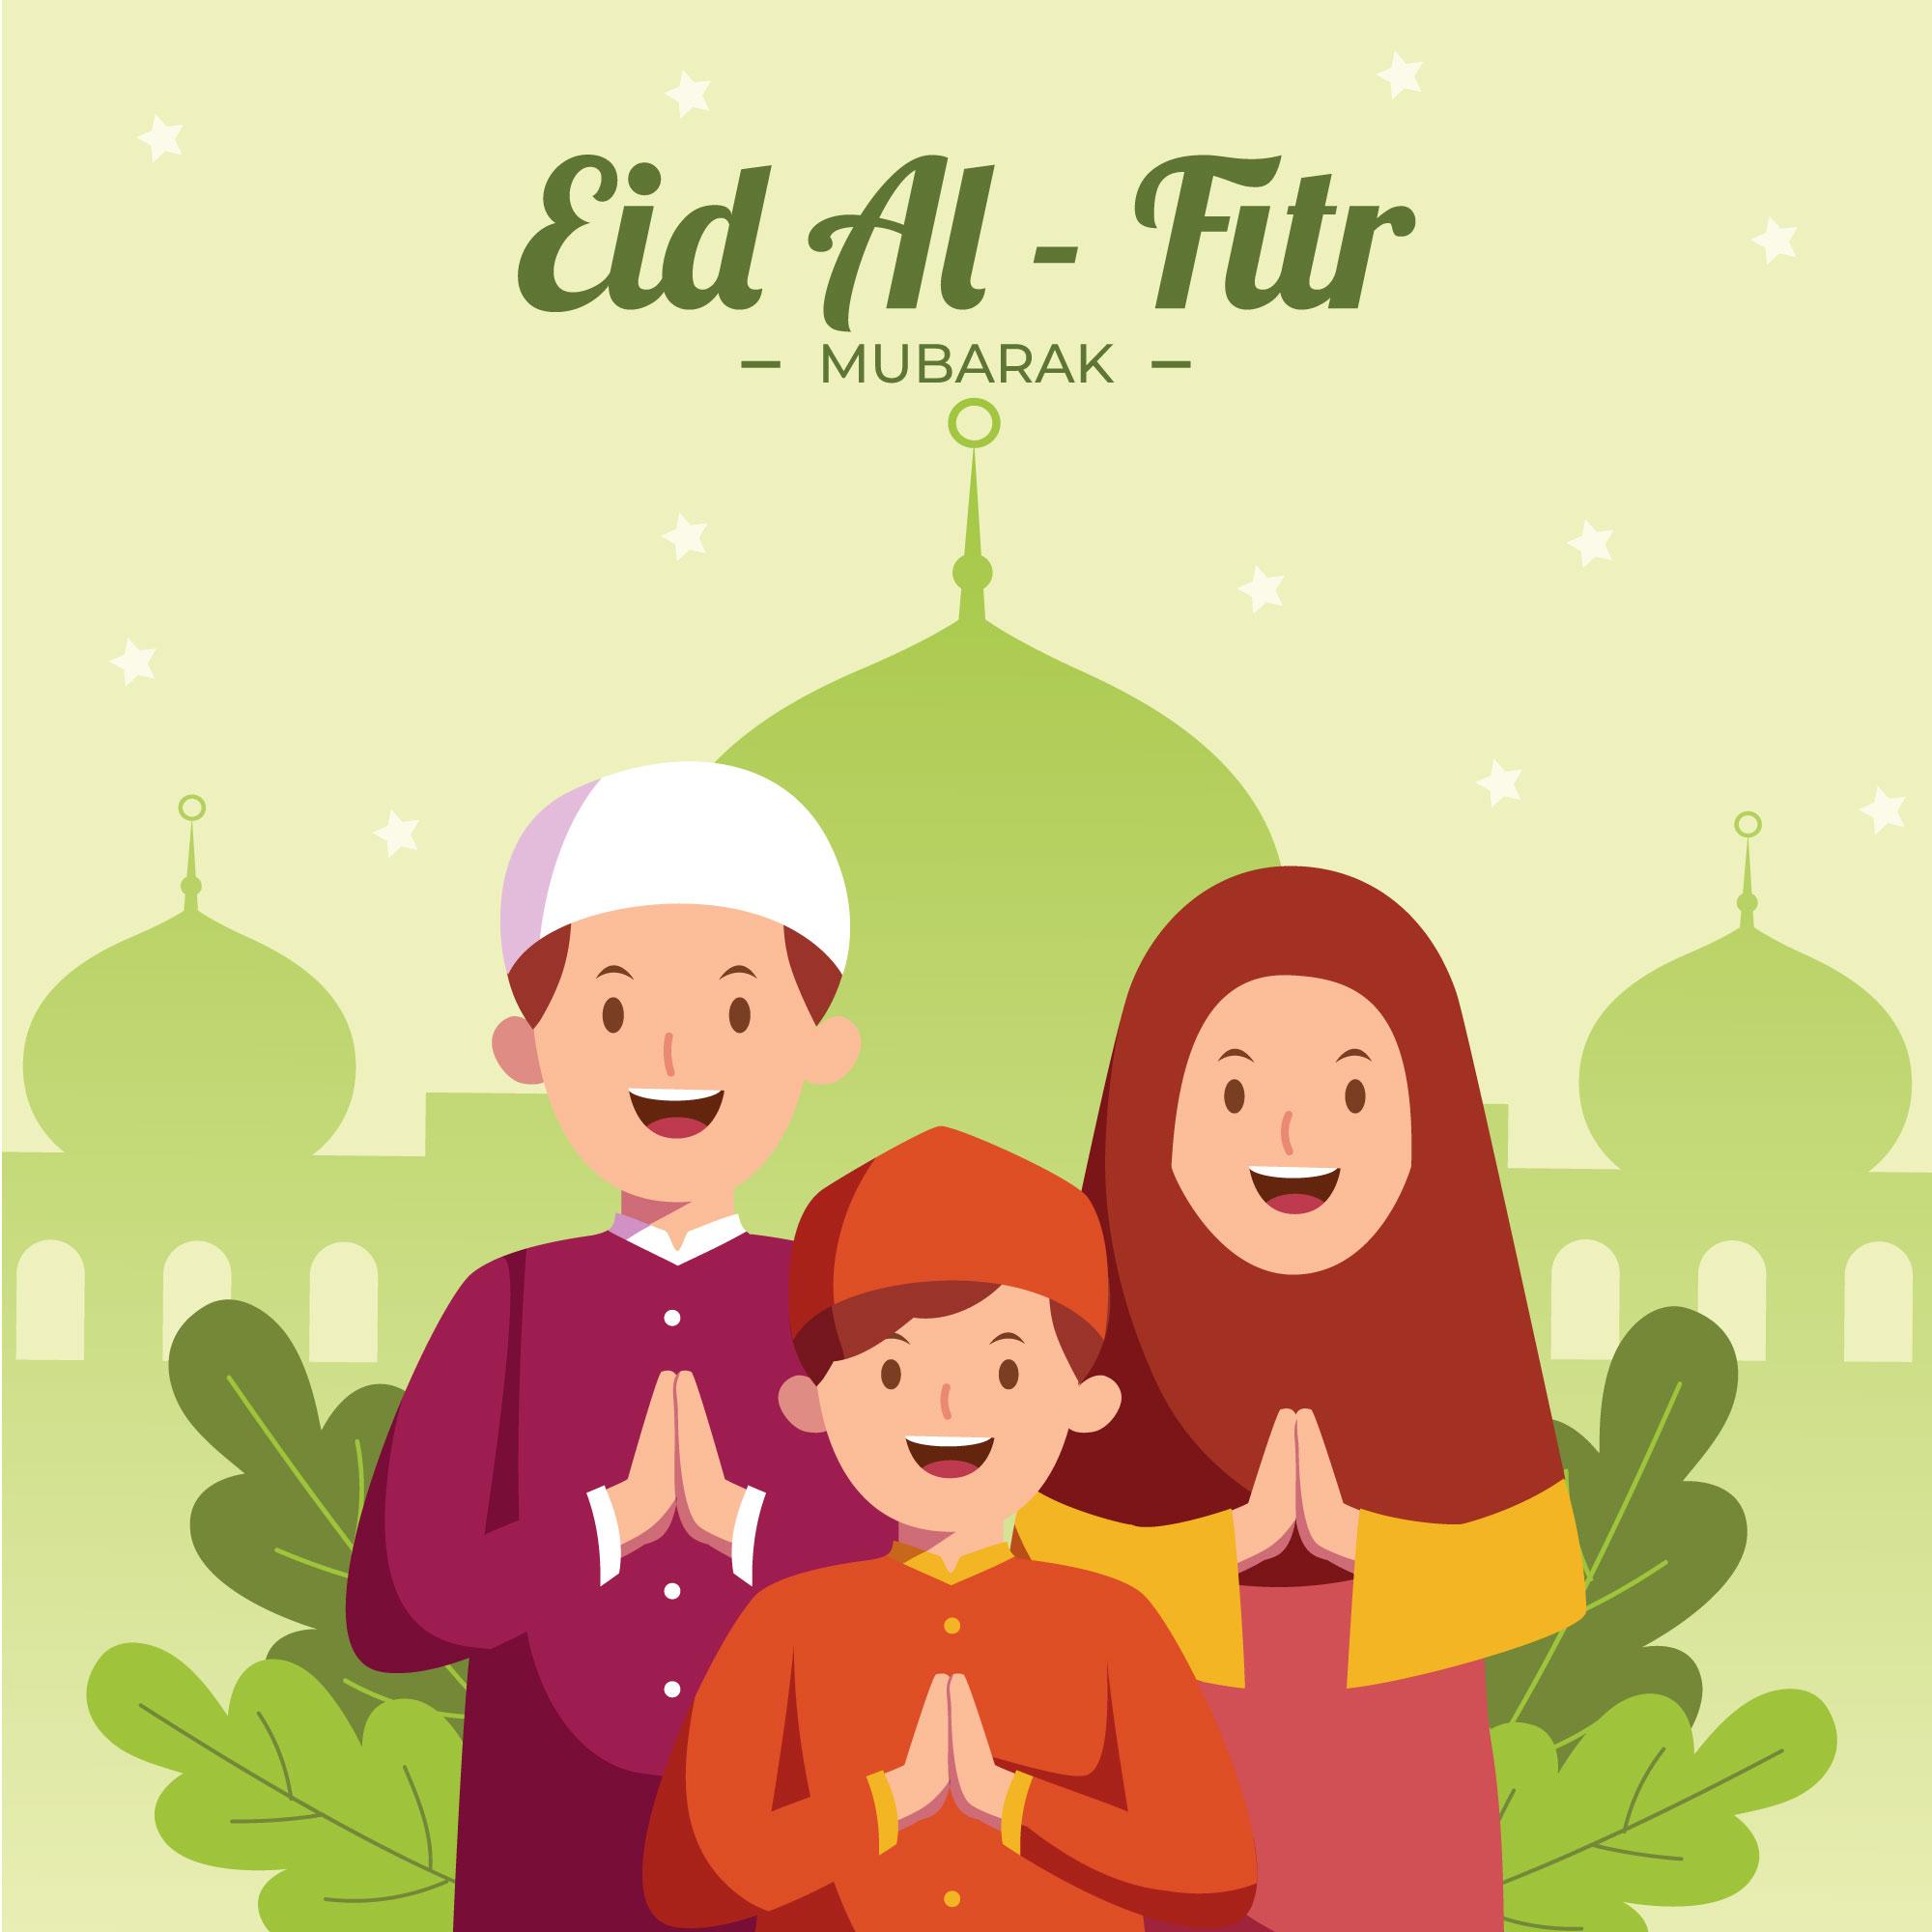 Eid al-fitr - A personal reflection - Meg Languages